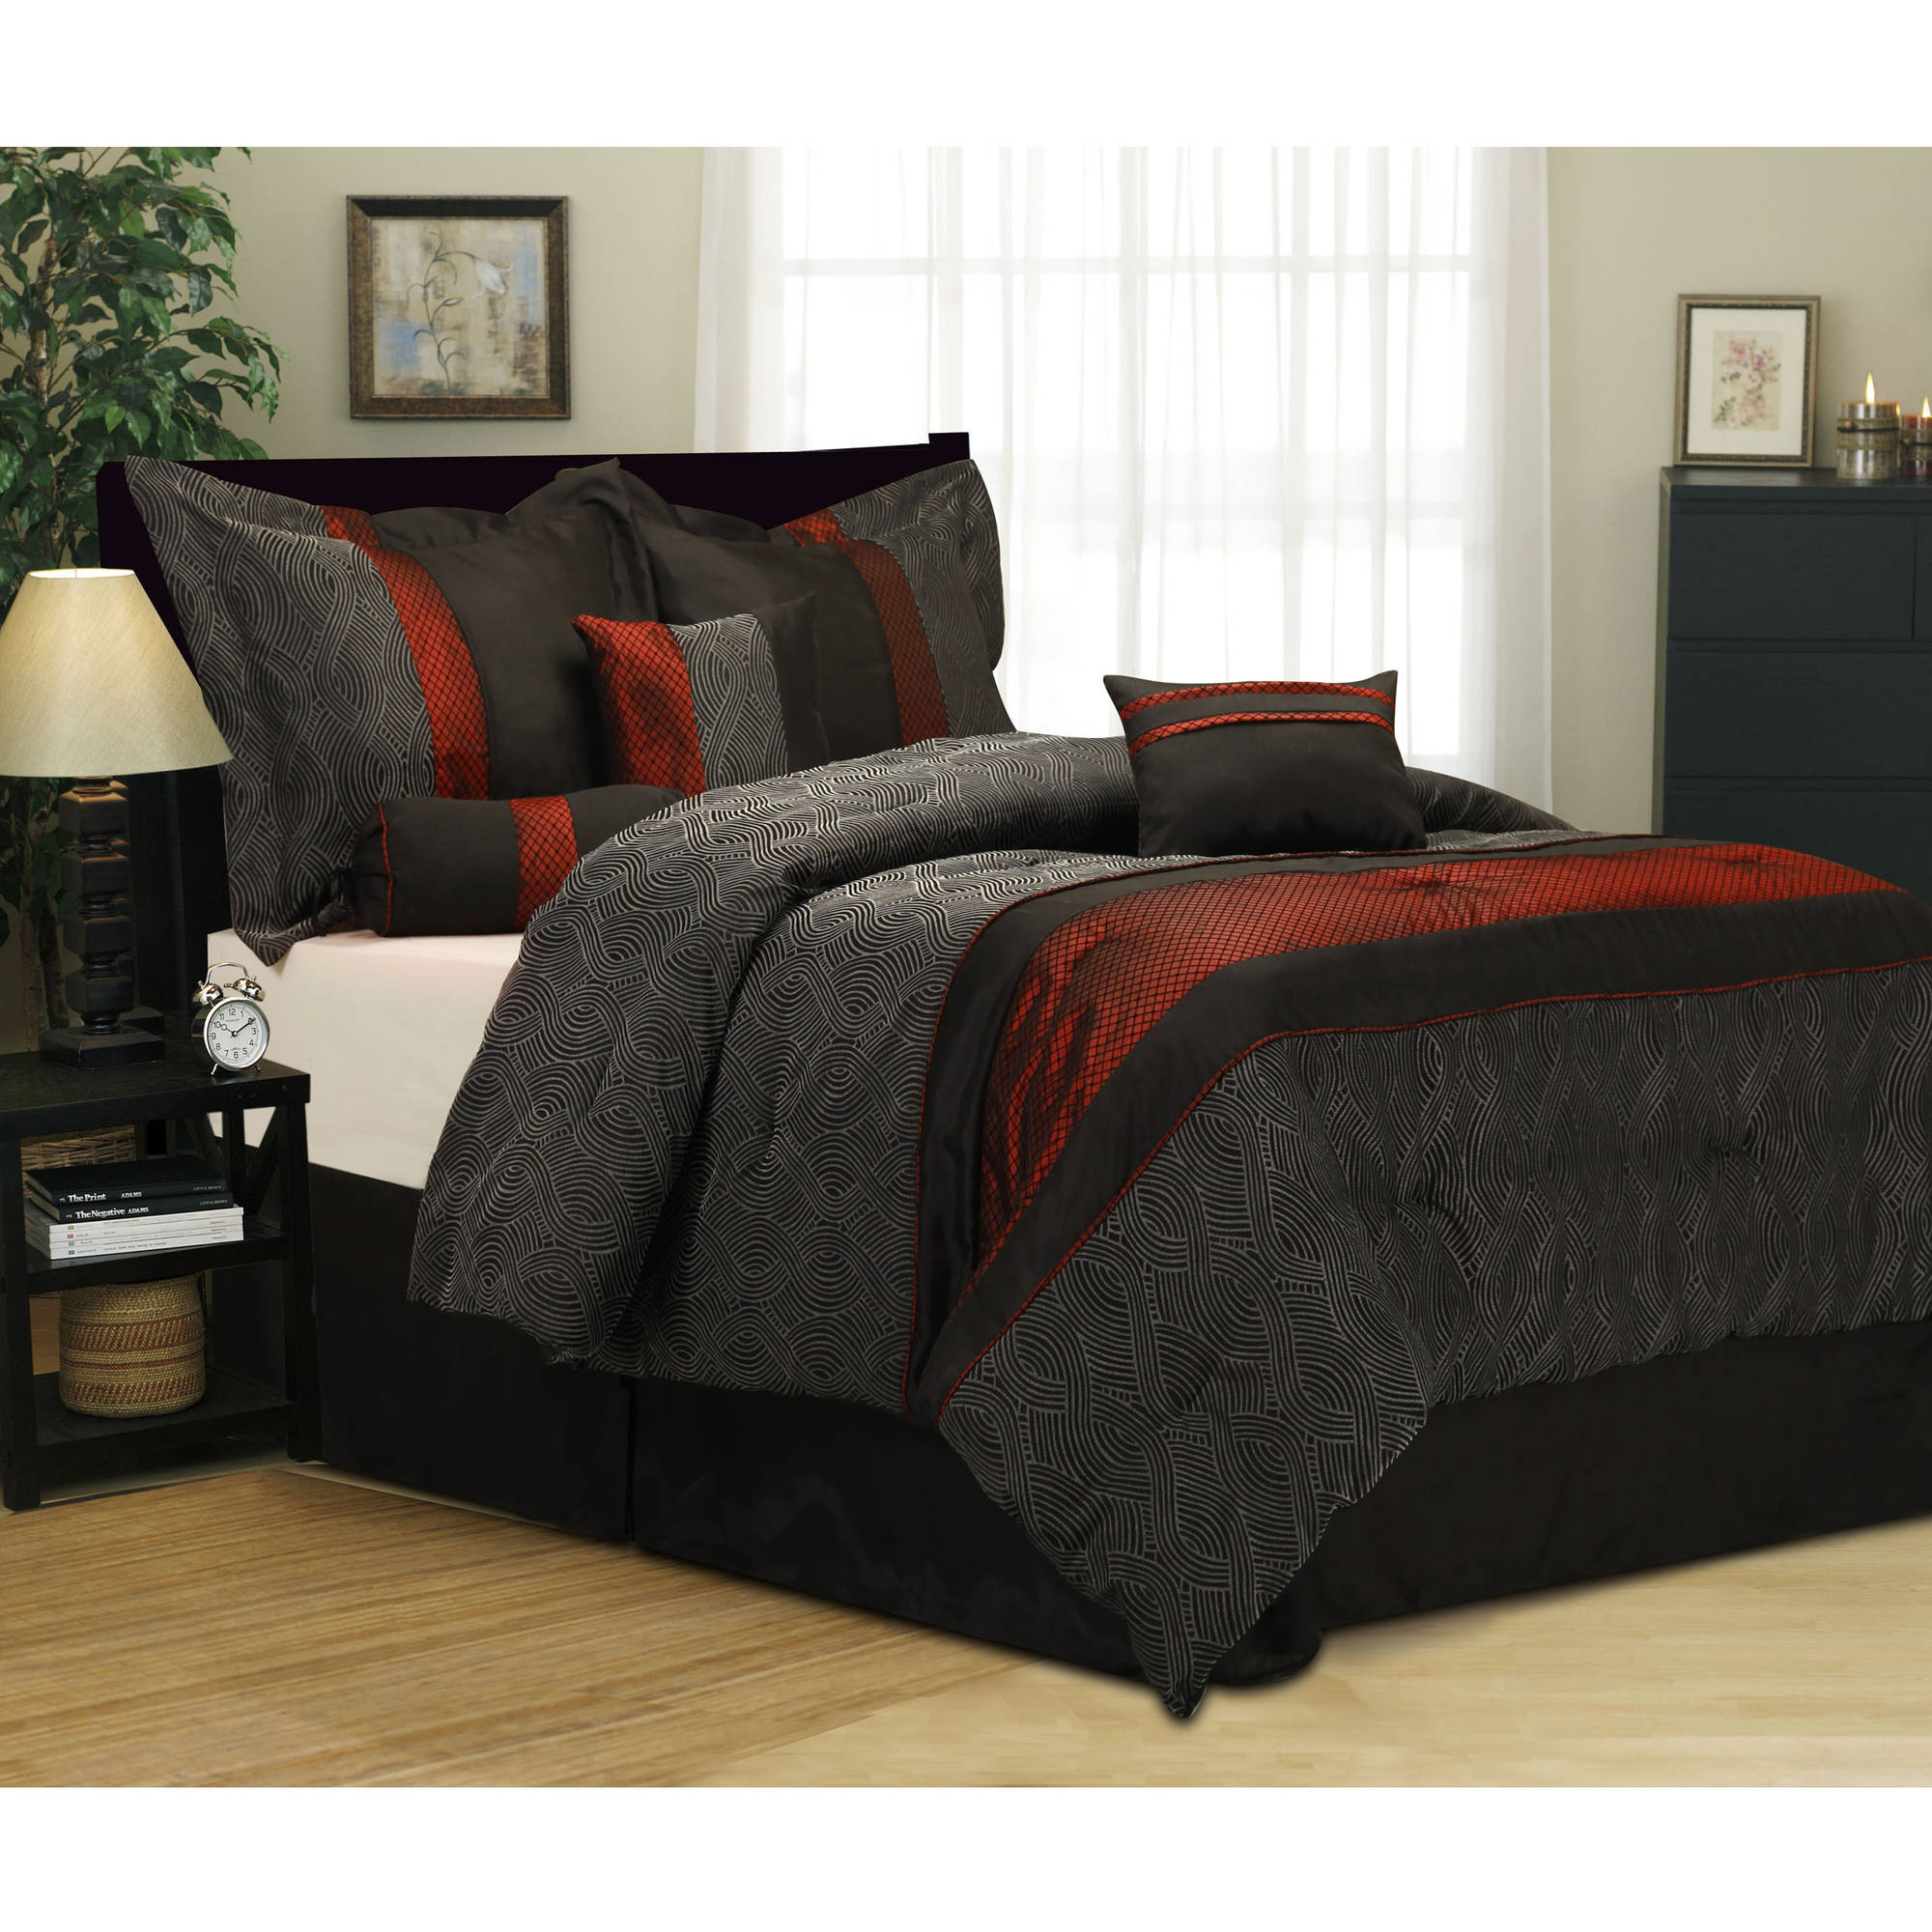 7 Piece Bedding Comforter Set Queen Size Black Red Shams Pillows Bedskirt Room Ebay